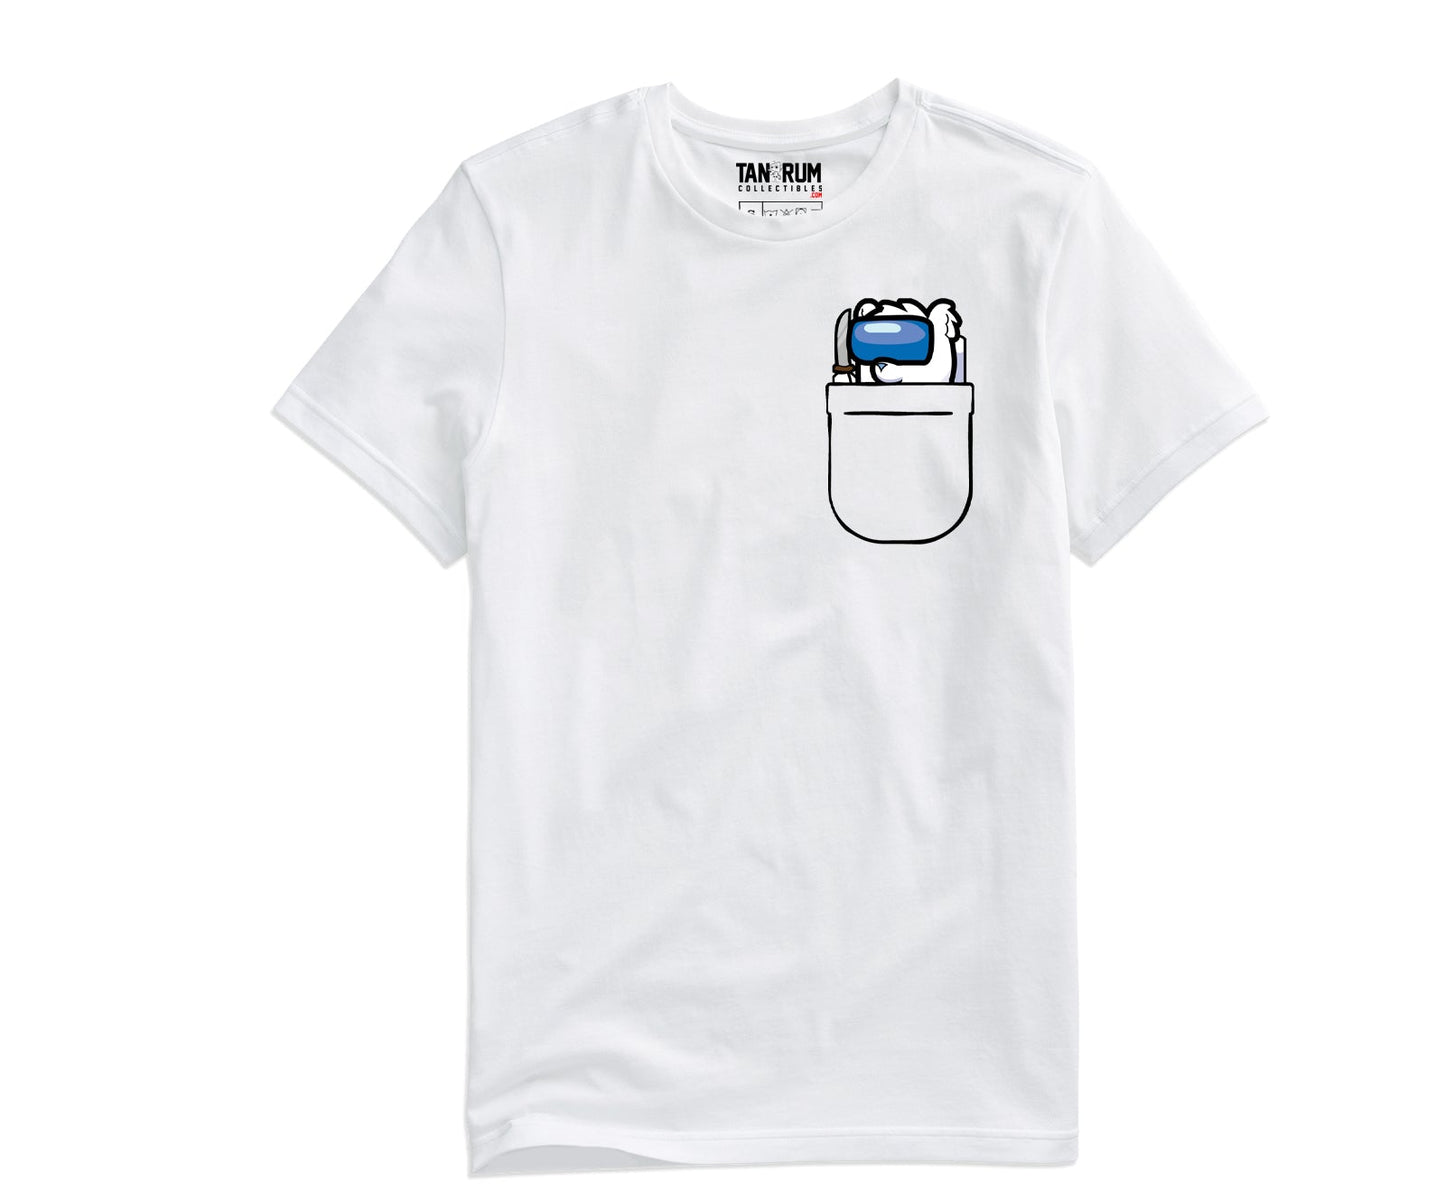 SnwBear - Printed Pocket Shirt - Stab (Streamer Purchase)